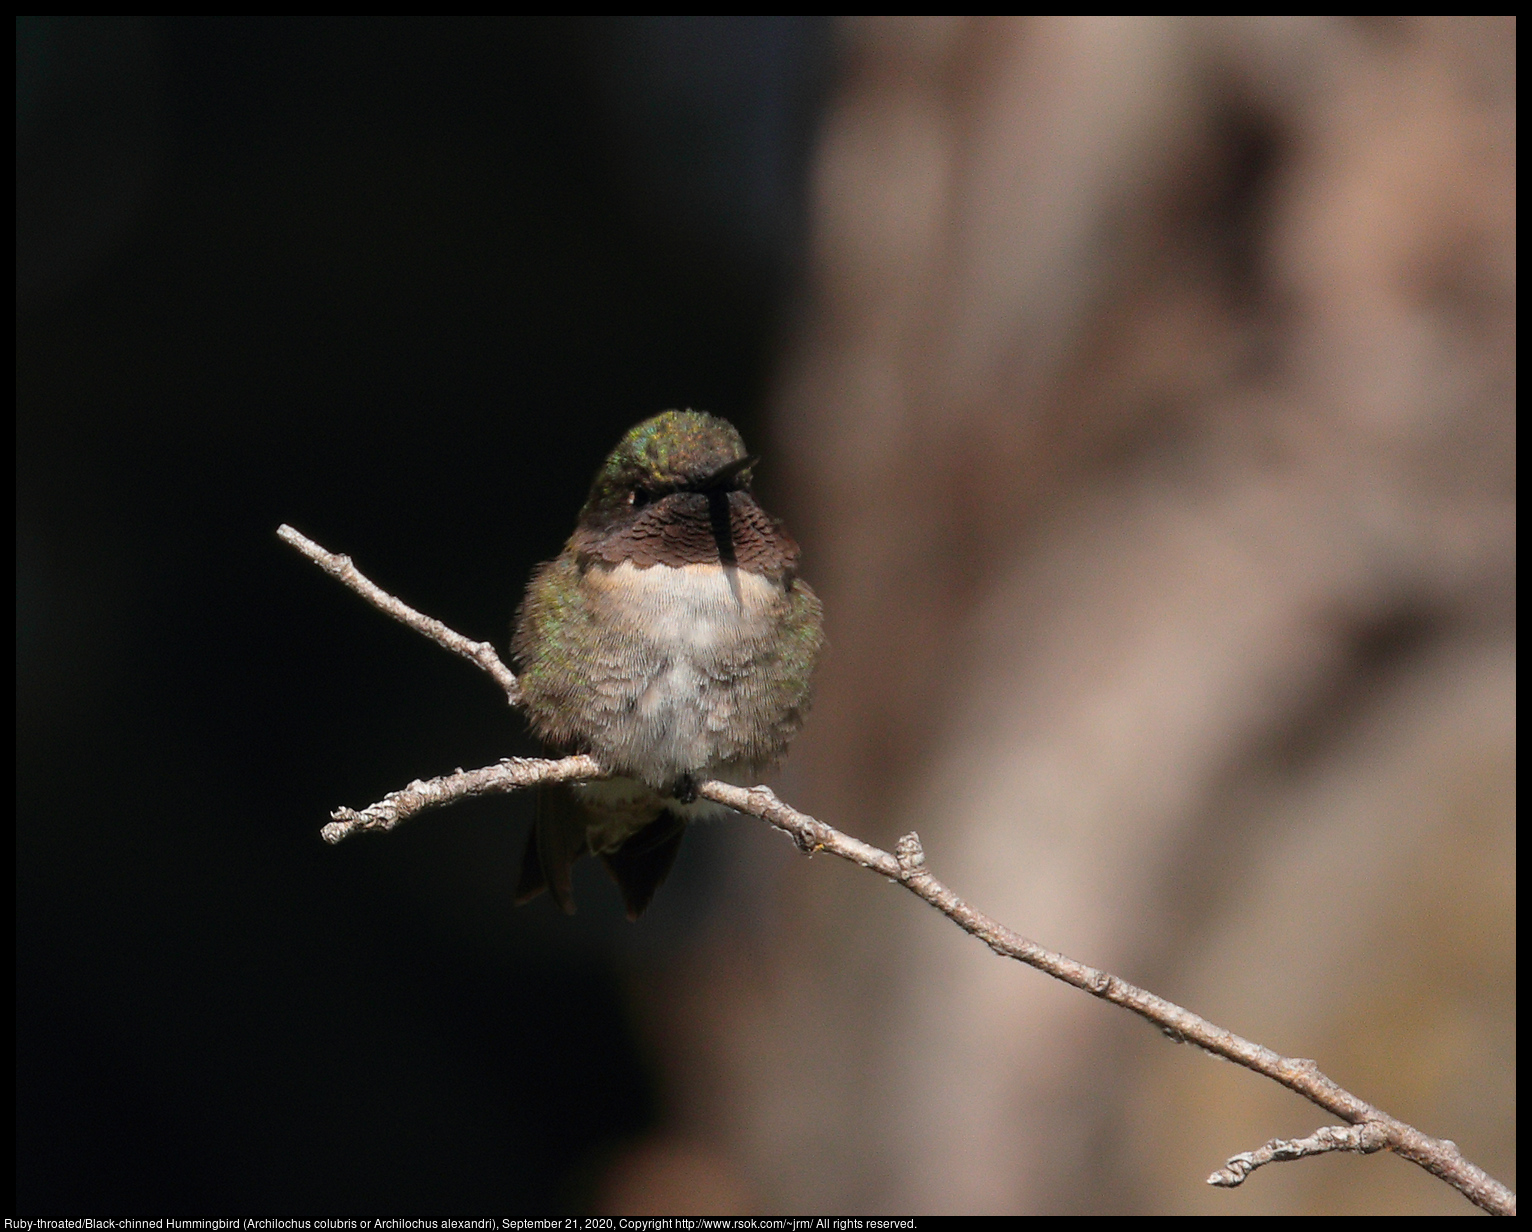 Ruby-throated/Black-chinned Hummingbird (Archilochus colubris or Archilochus alexandri), September 21, 2020